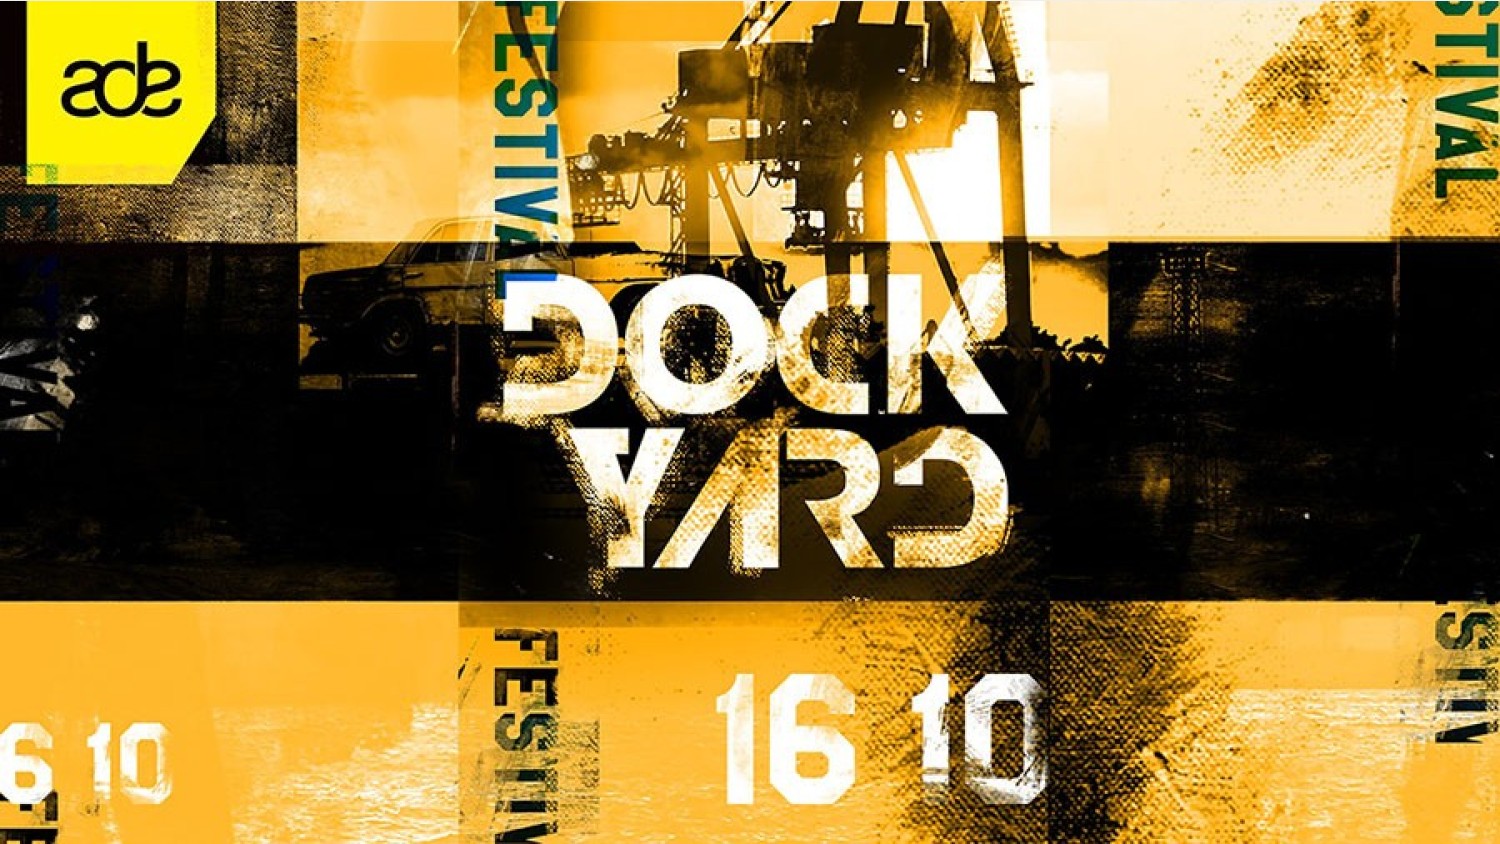 Party report: Dockyard Festival ADE 2021, Amsterdam (16-10-2021)